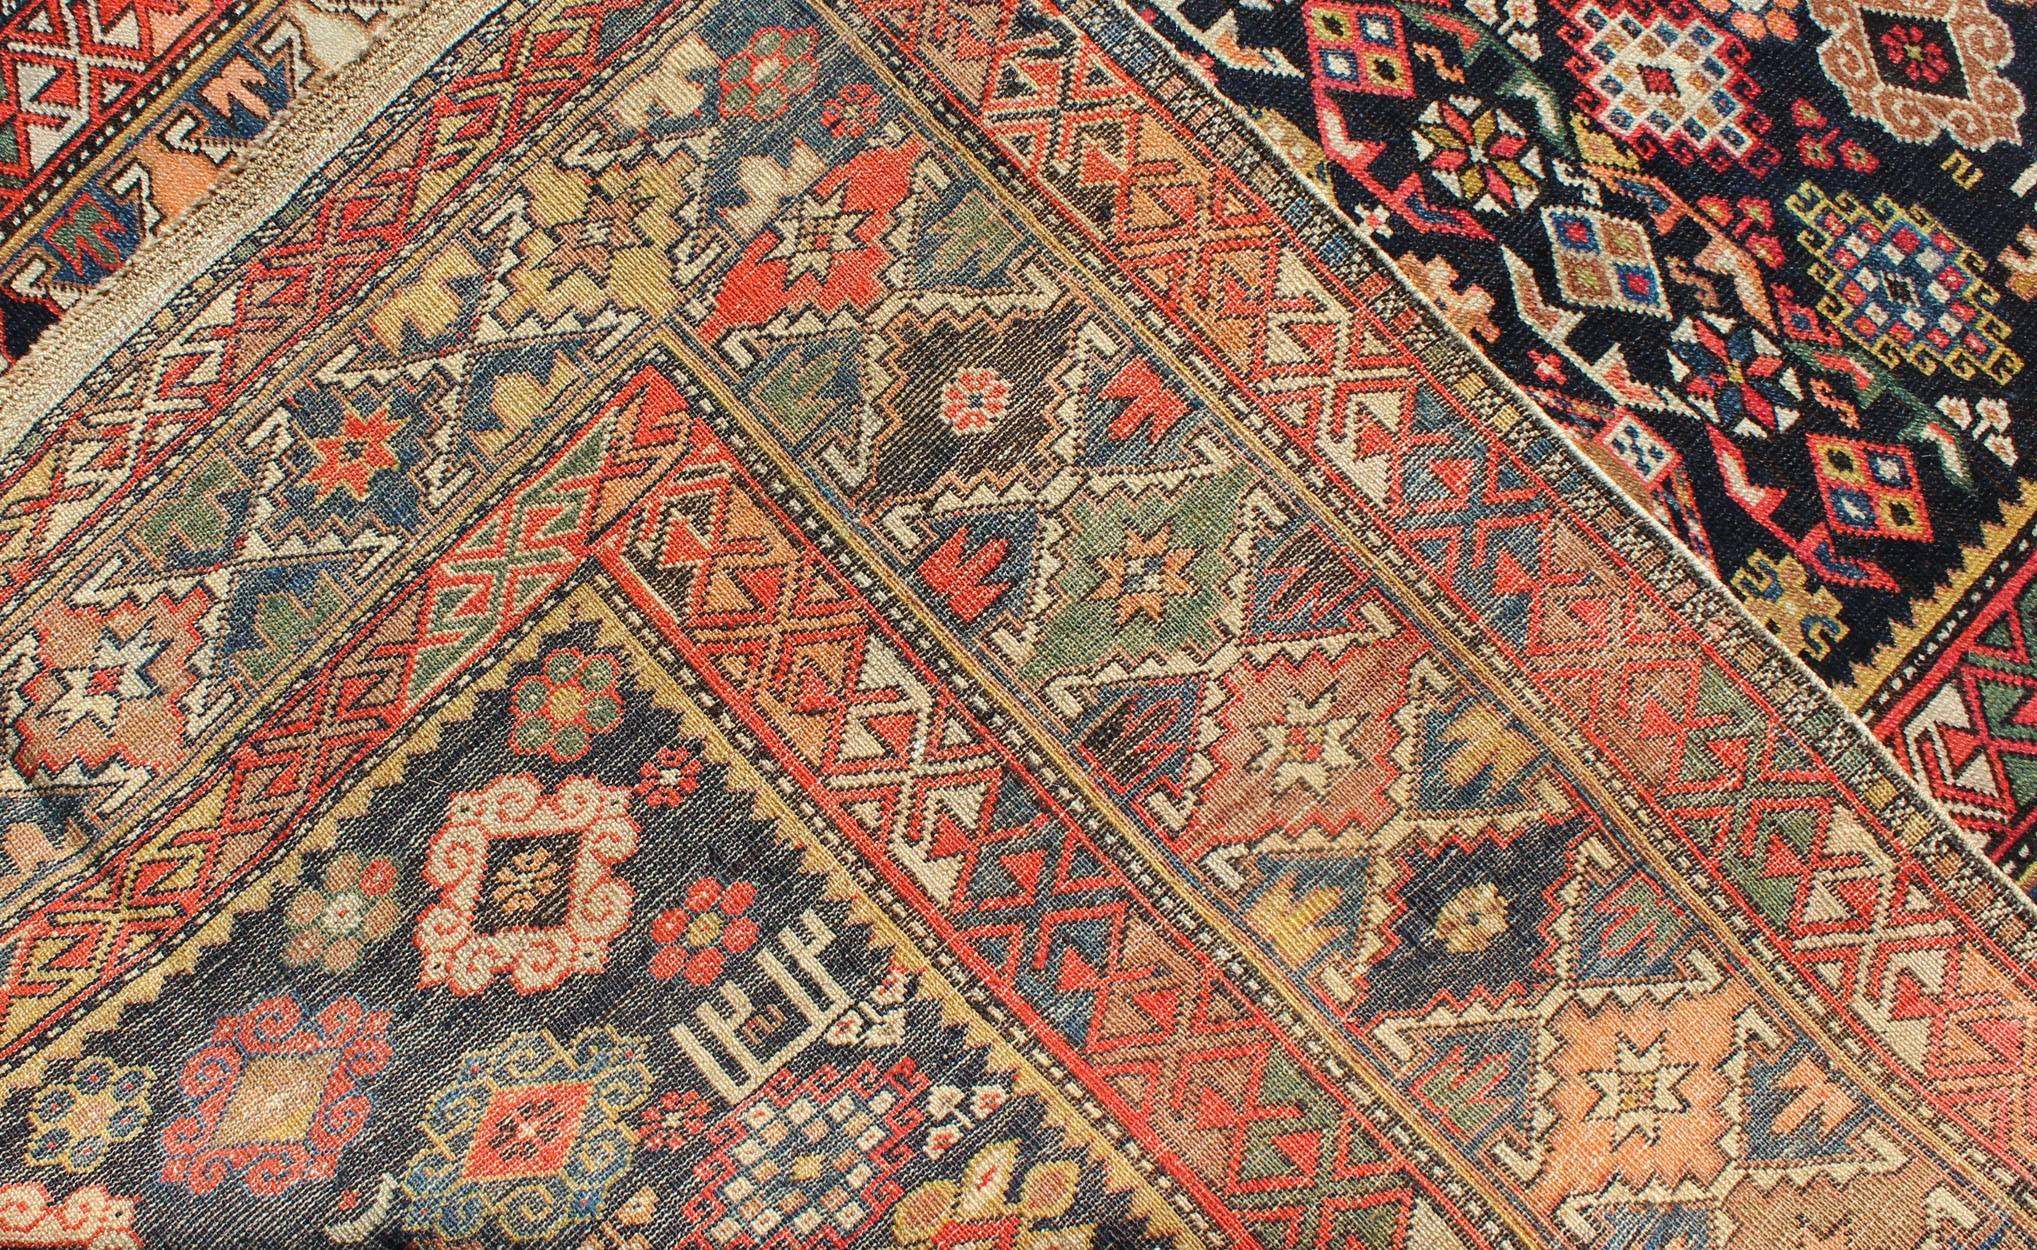 Caucasian Colorful Antique Kuba Carpet with Intricate Geometric Design For Sale